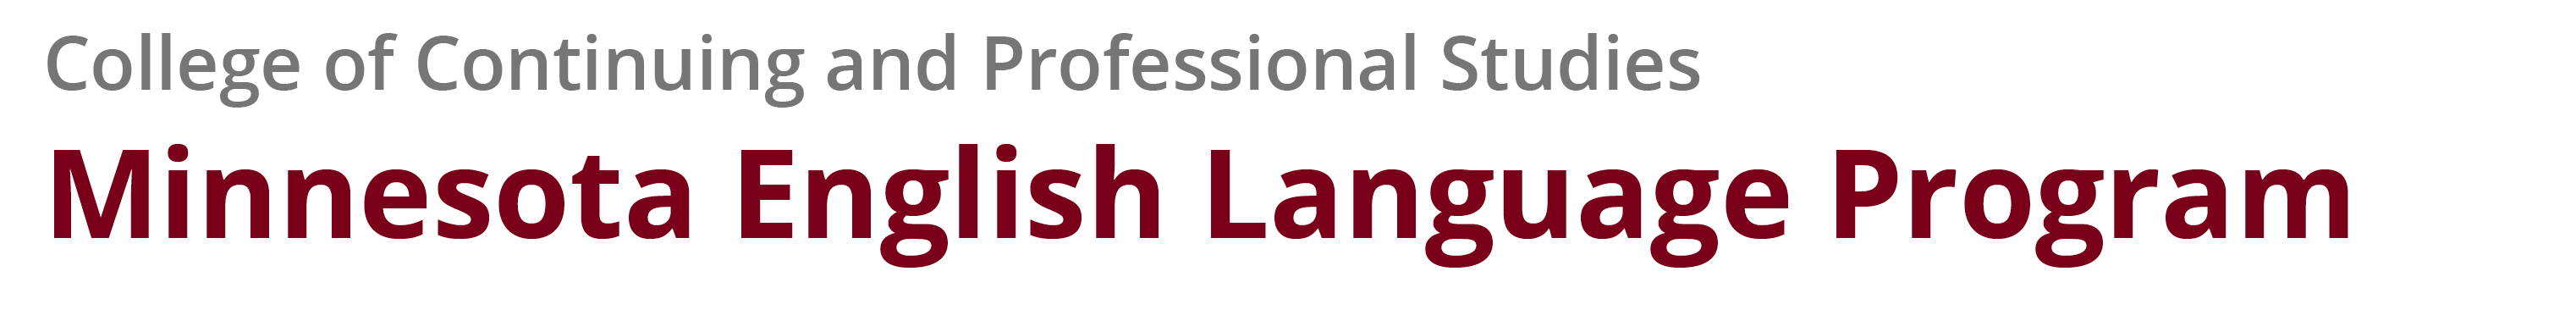 Minnesota English Language Program - wordmark